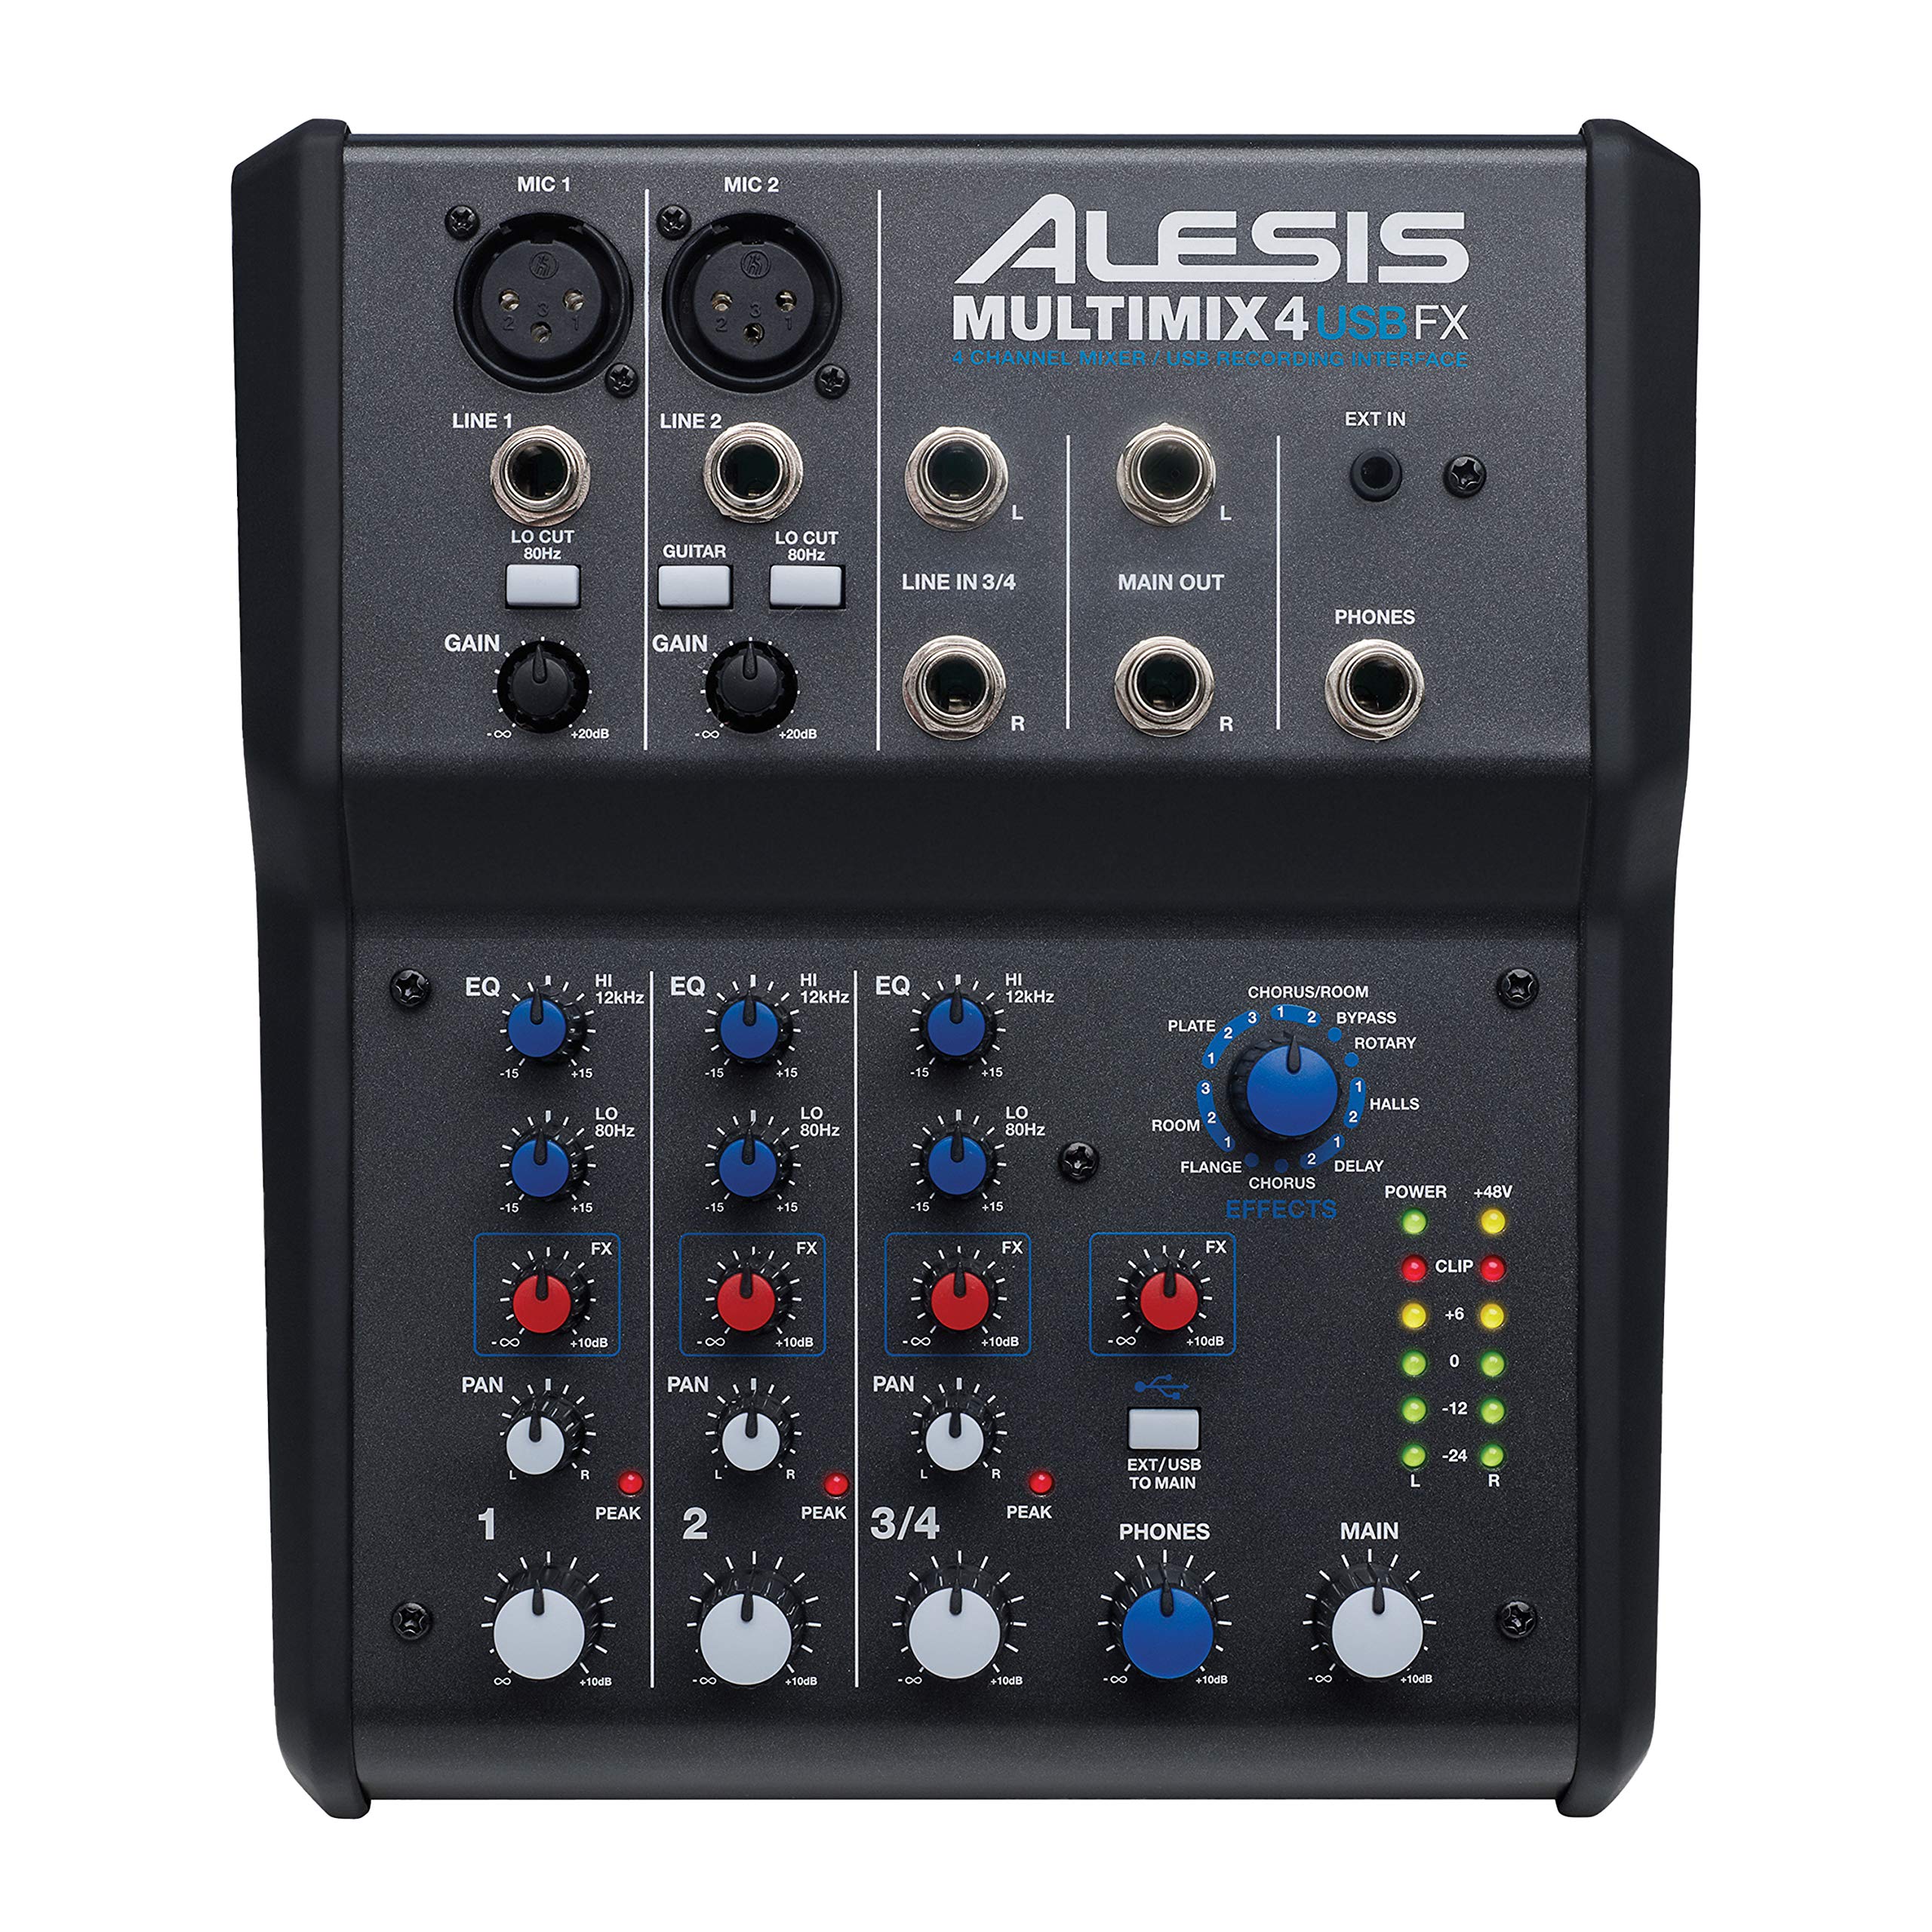 Alesis マルチミックス USB FX |エフェクトとUSBオーディオインターフェイスを備えたチャンネルミ...